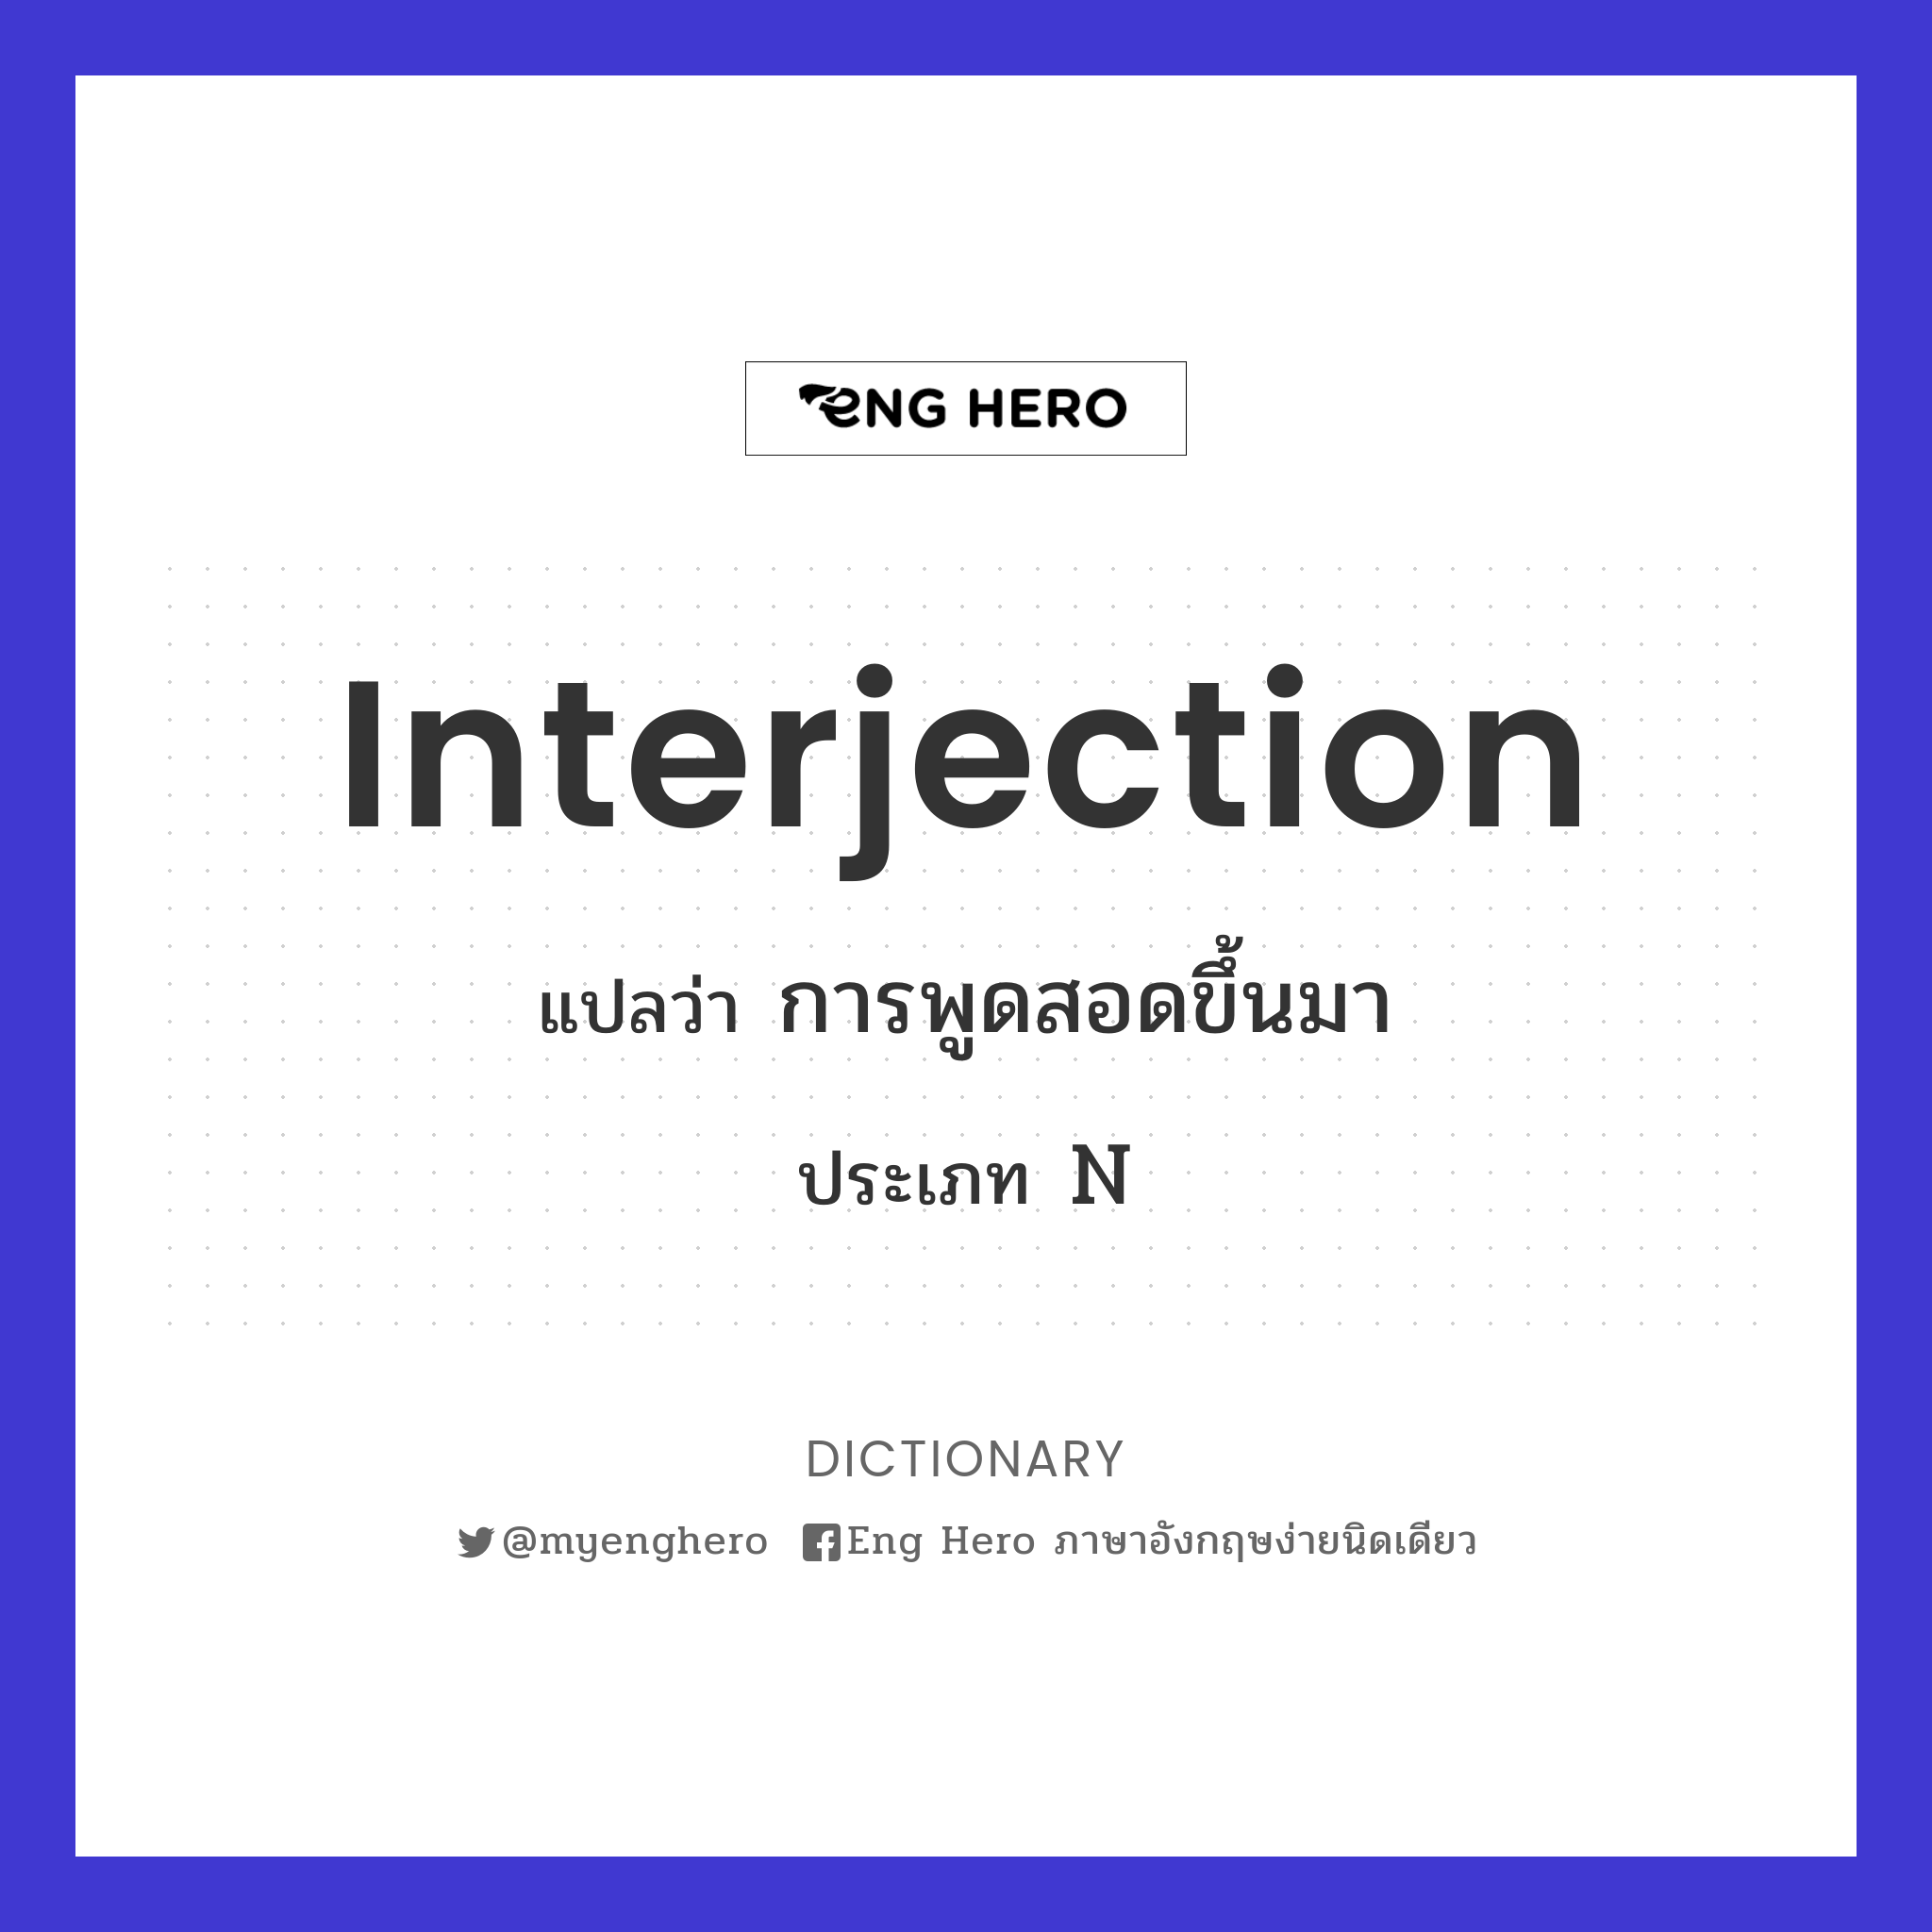 interjection